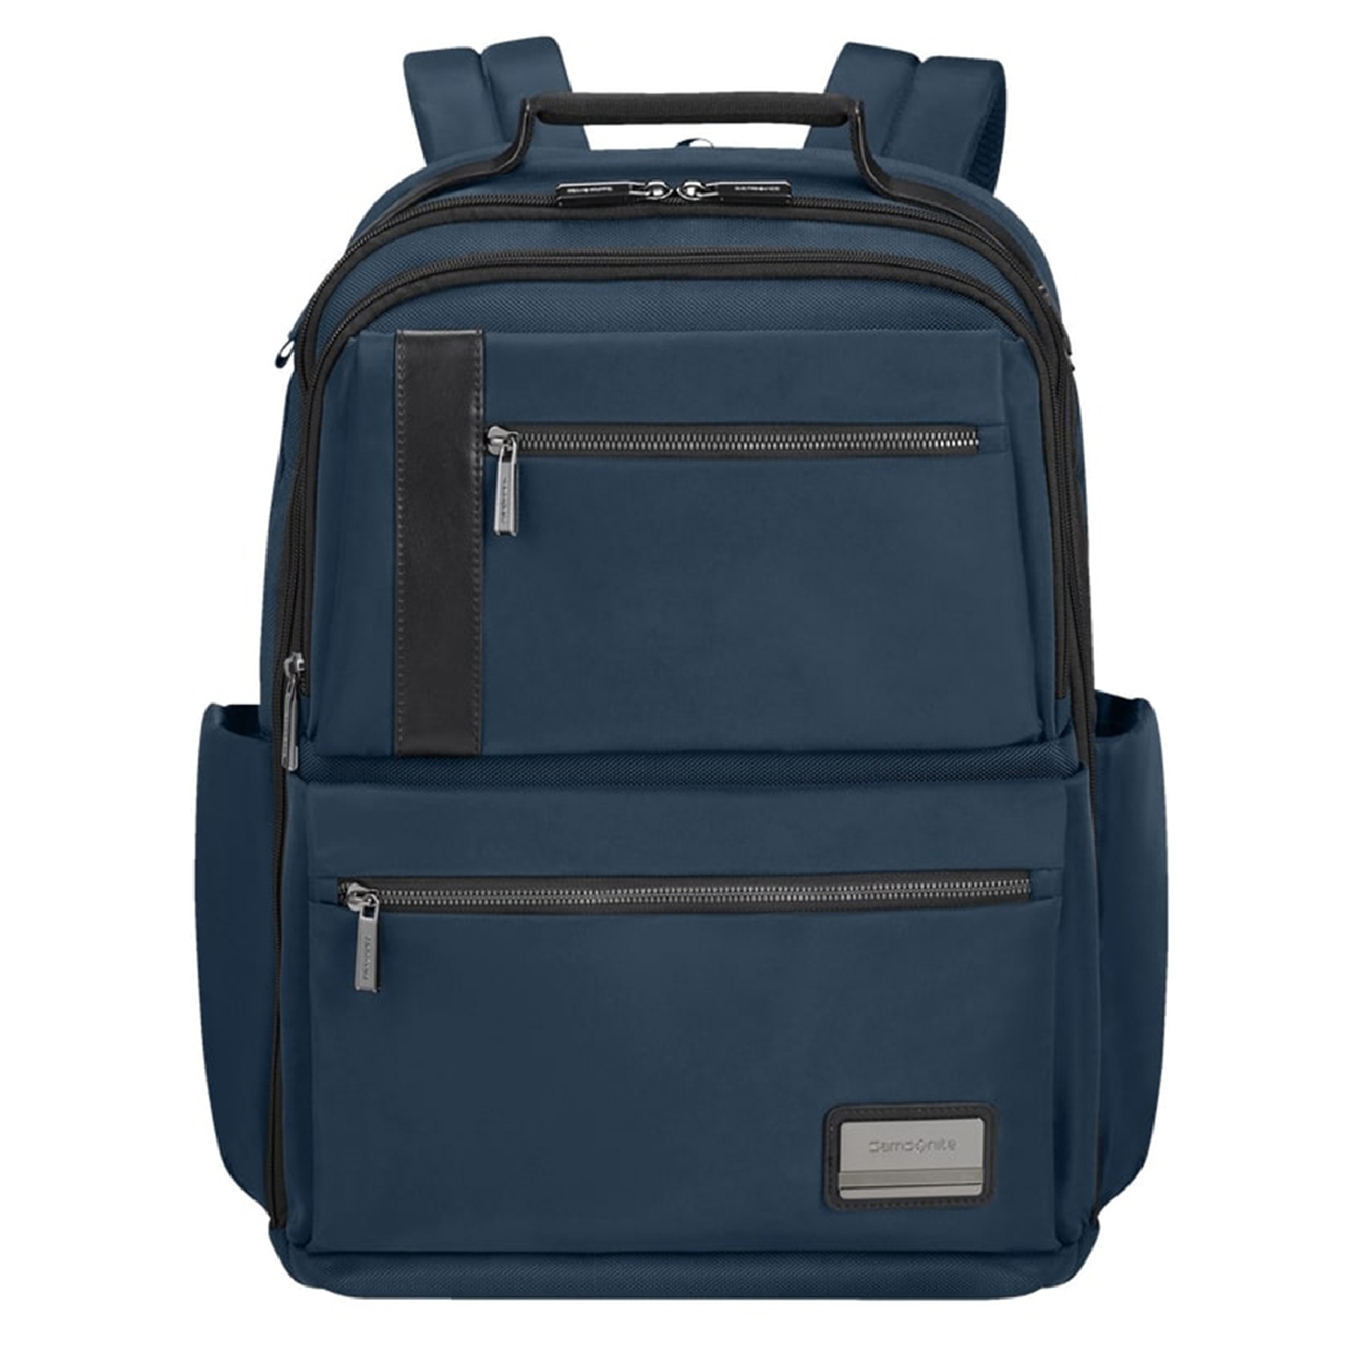 Samsonite Openroad 2.0 Laptop Backpack 17.3'' + Cloth. Comp cool blue backpack